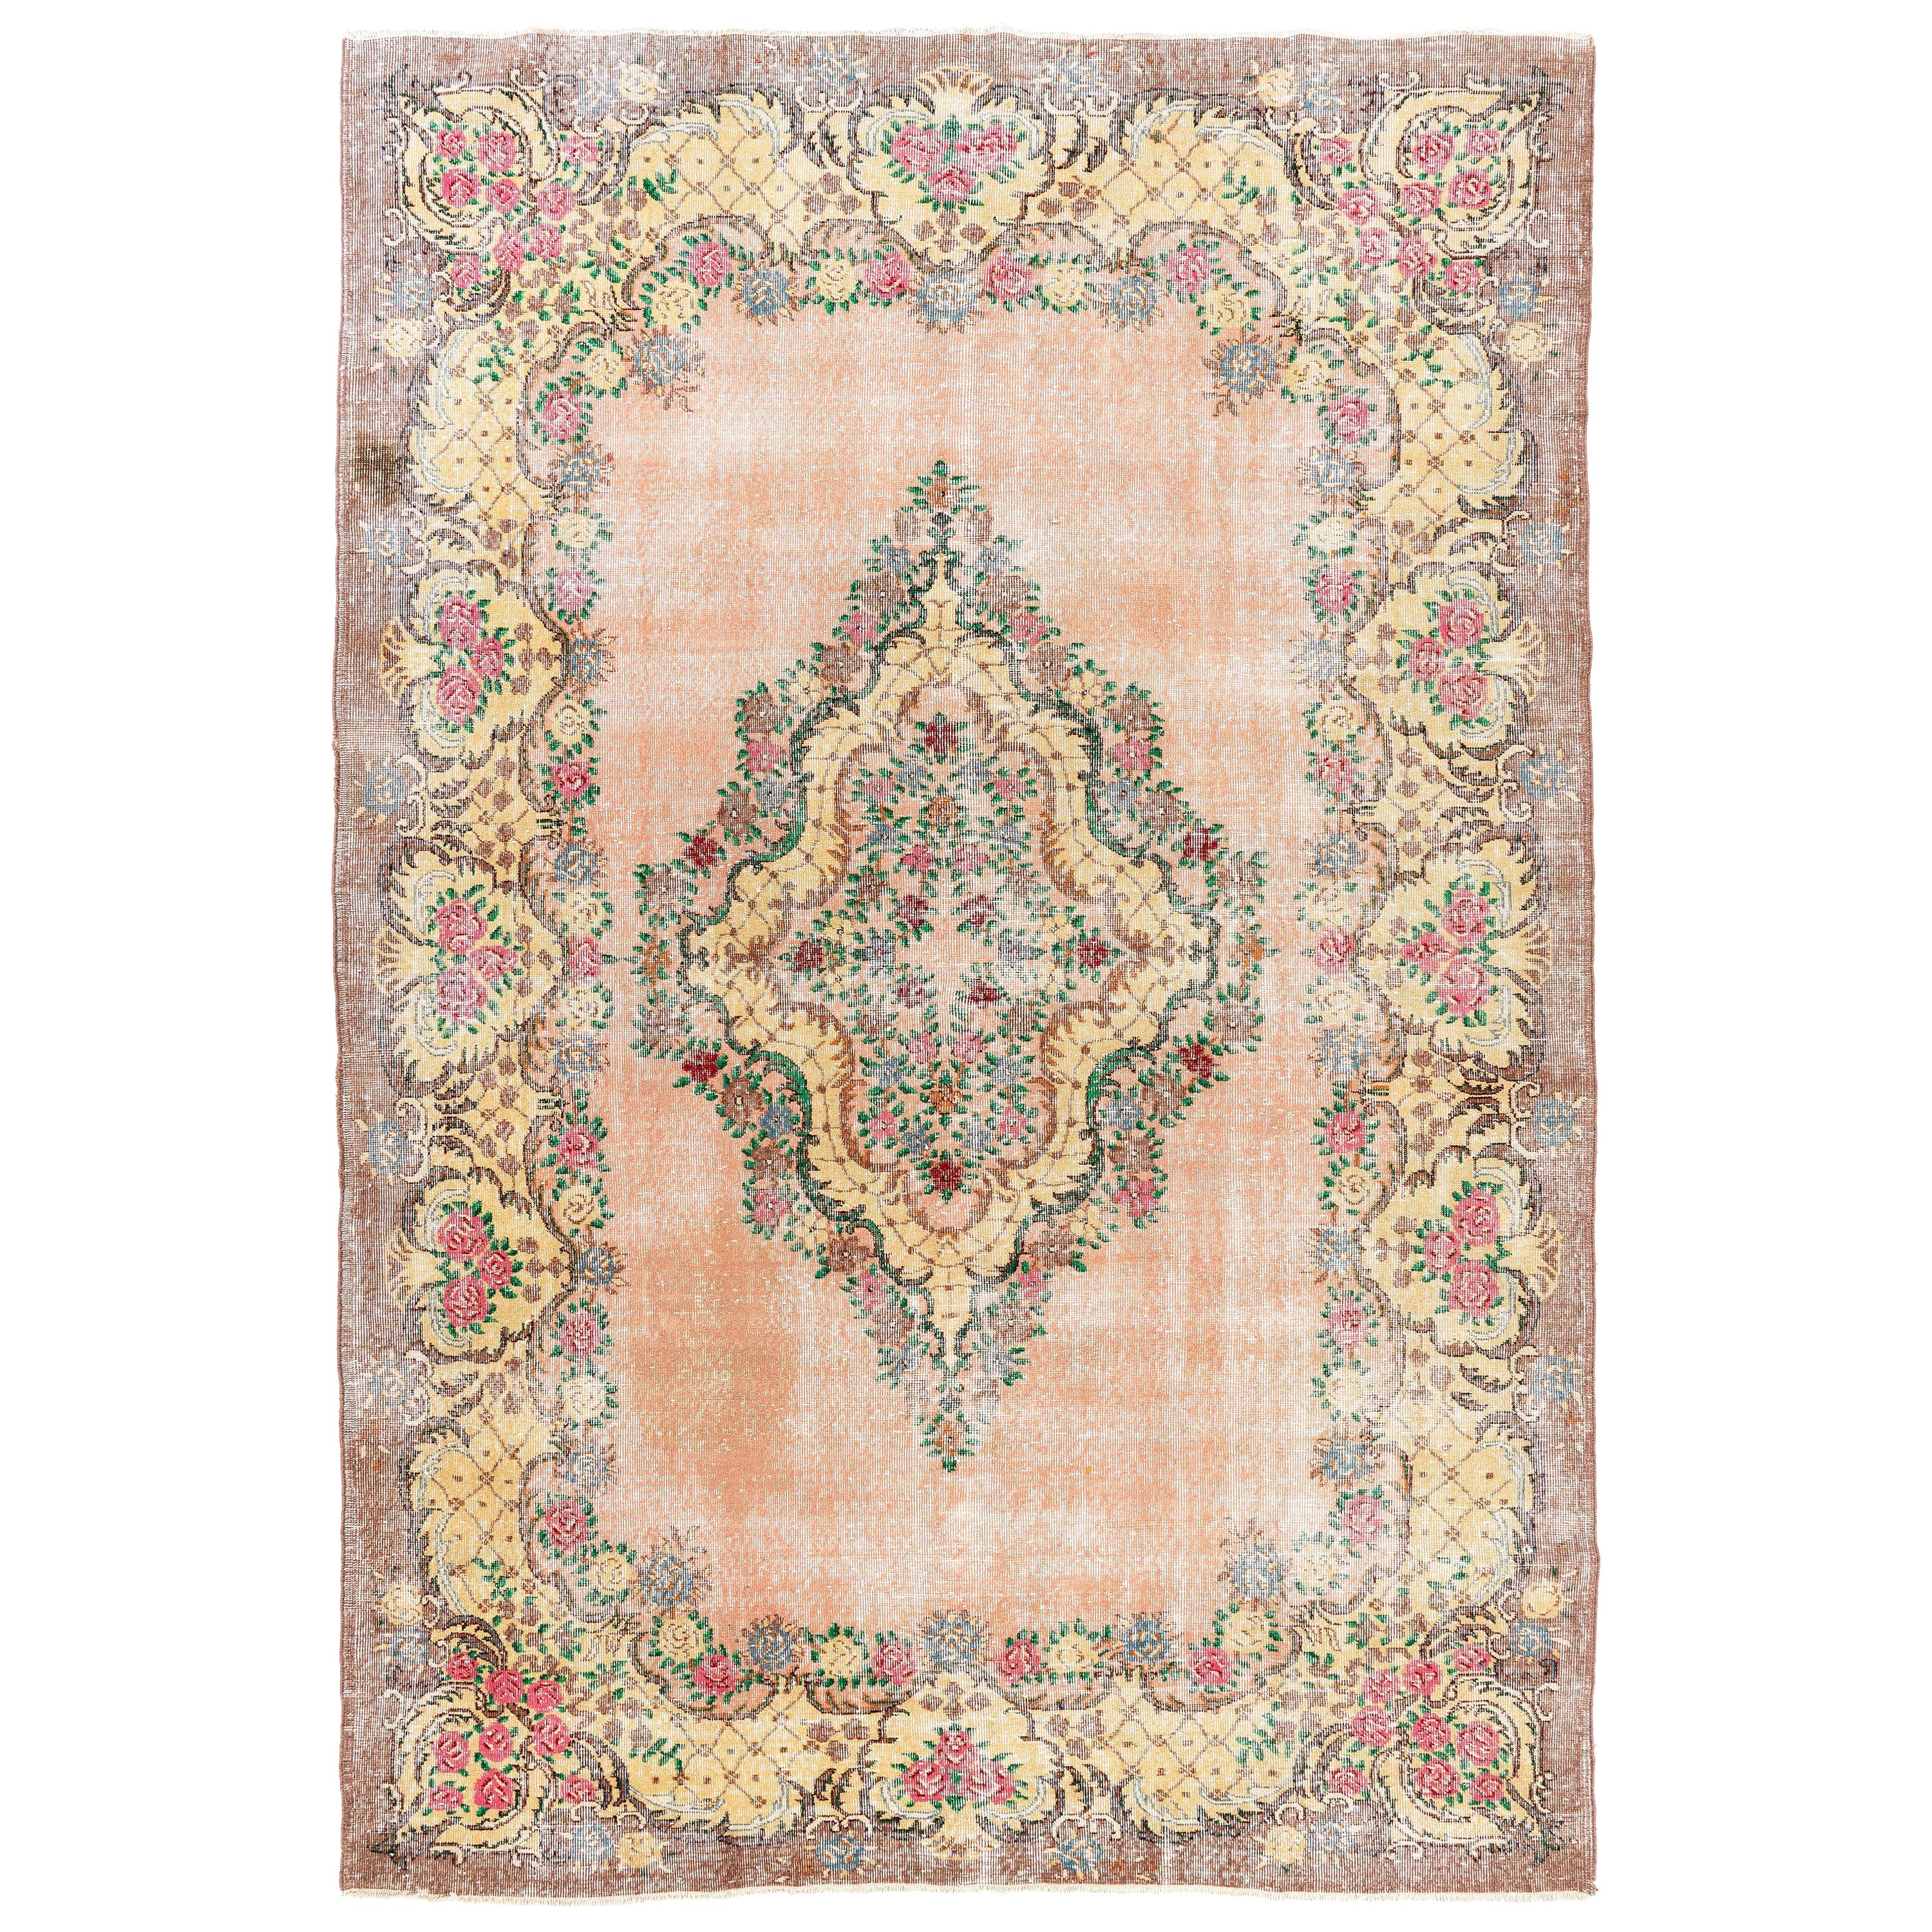 Distressed Vintage Floral Ghiordes Rug, 7.4x11 Ft Traditional Handmade Carpet